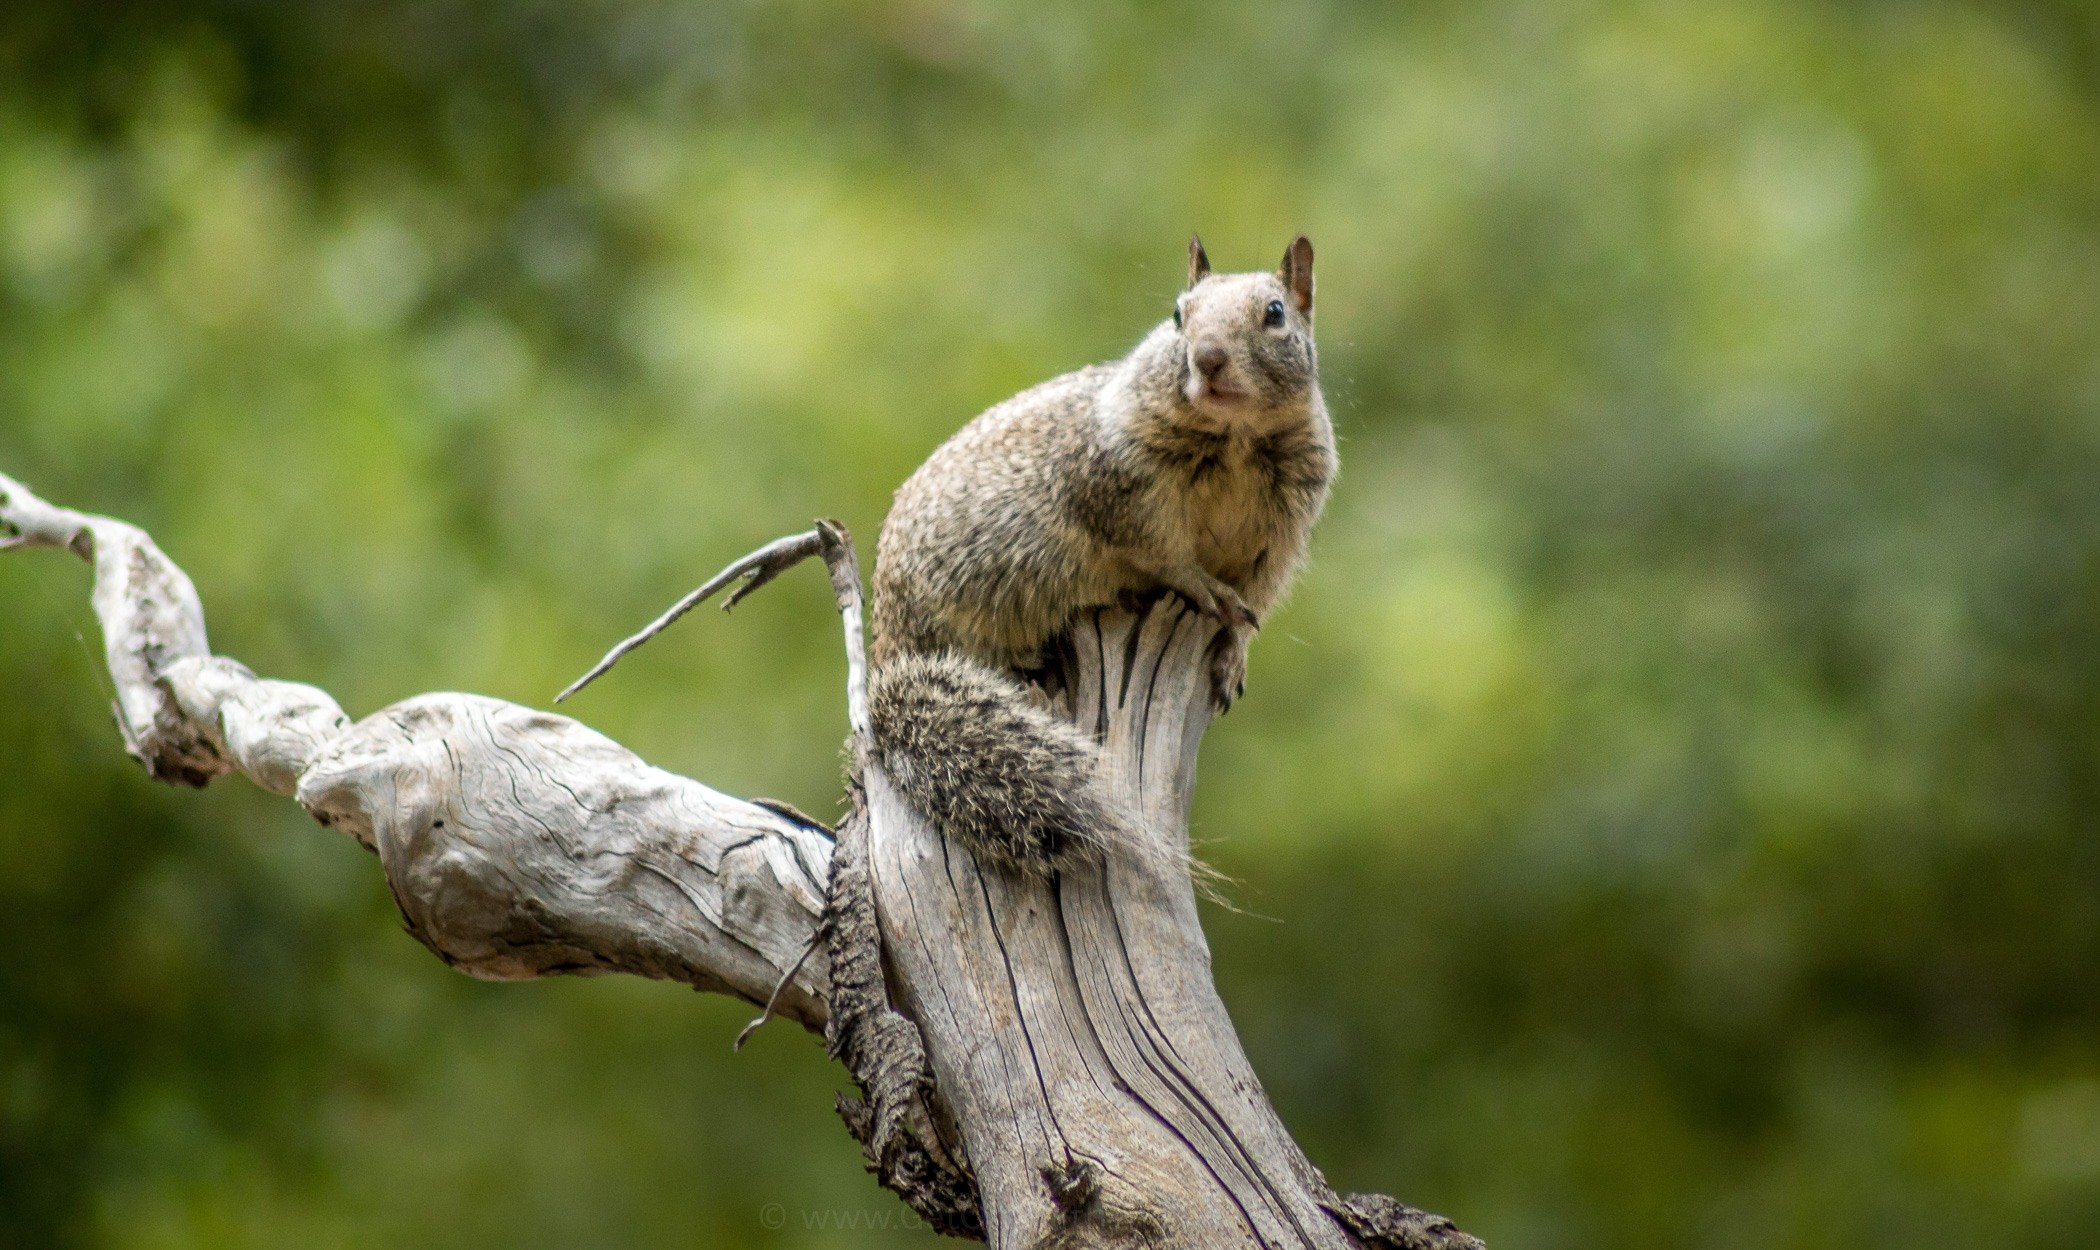 A squirrel in Yosemite